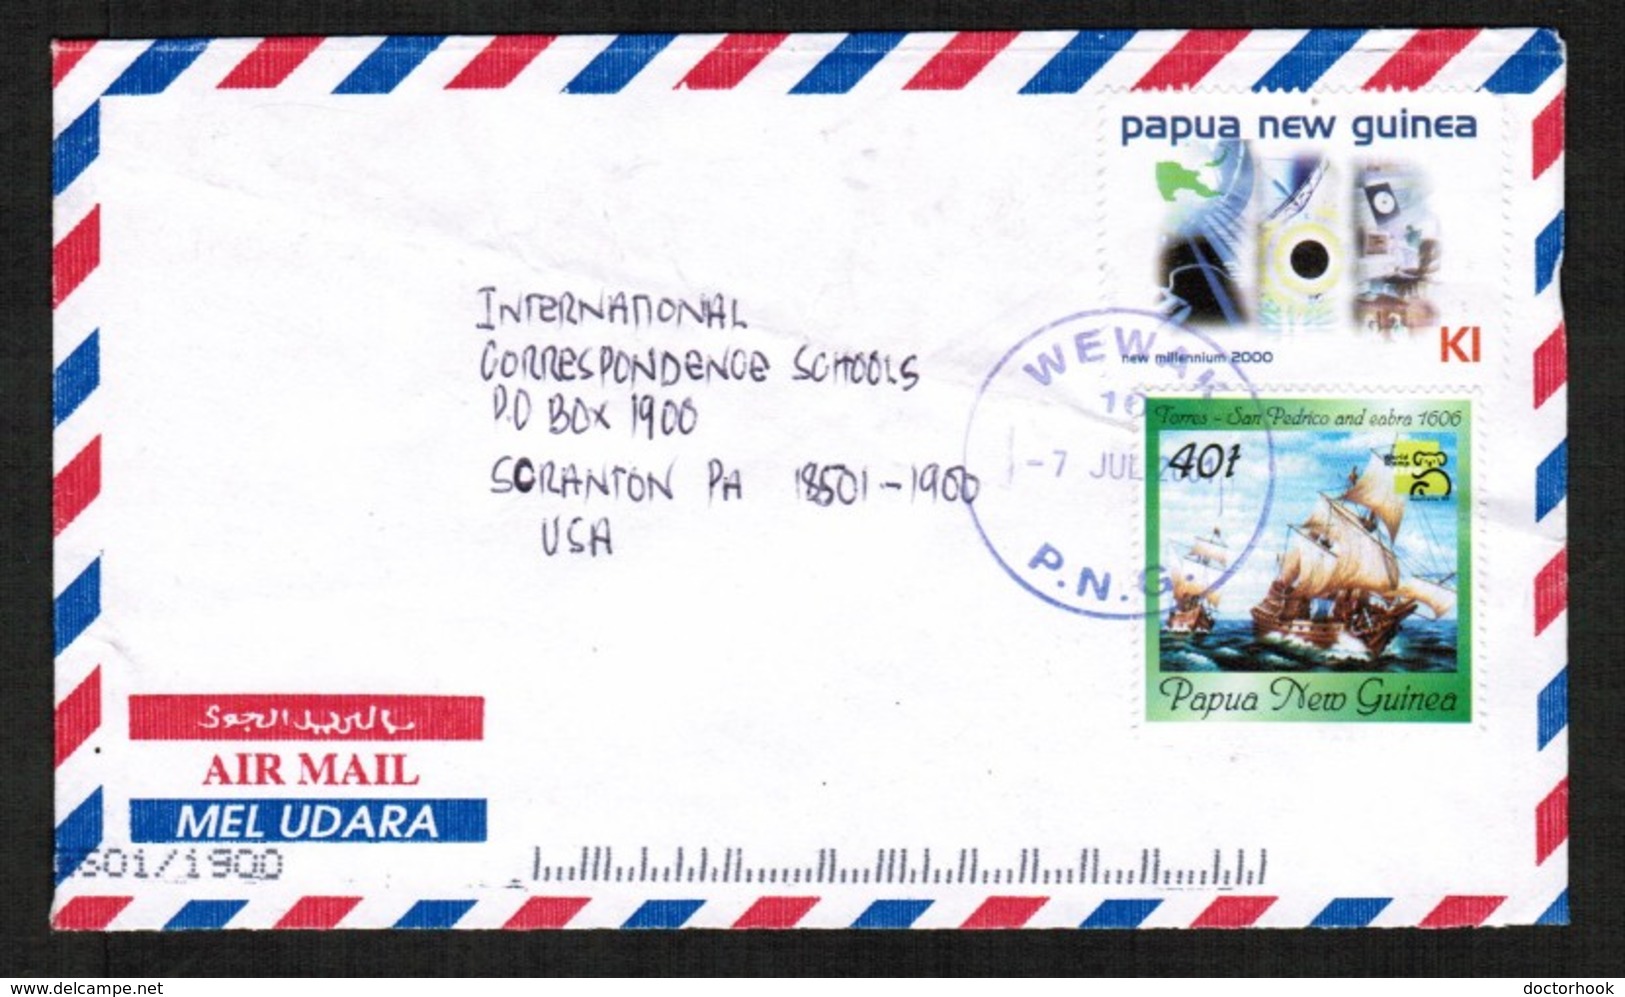 PAPUA NEW GUINEA   SCOTT # 964f & 969 On AIRMAIL COVER To SCRANTON, PENN. USA (7/JUL/2001) (OS-444) - Papoea-Nieuw-Guinea